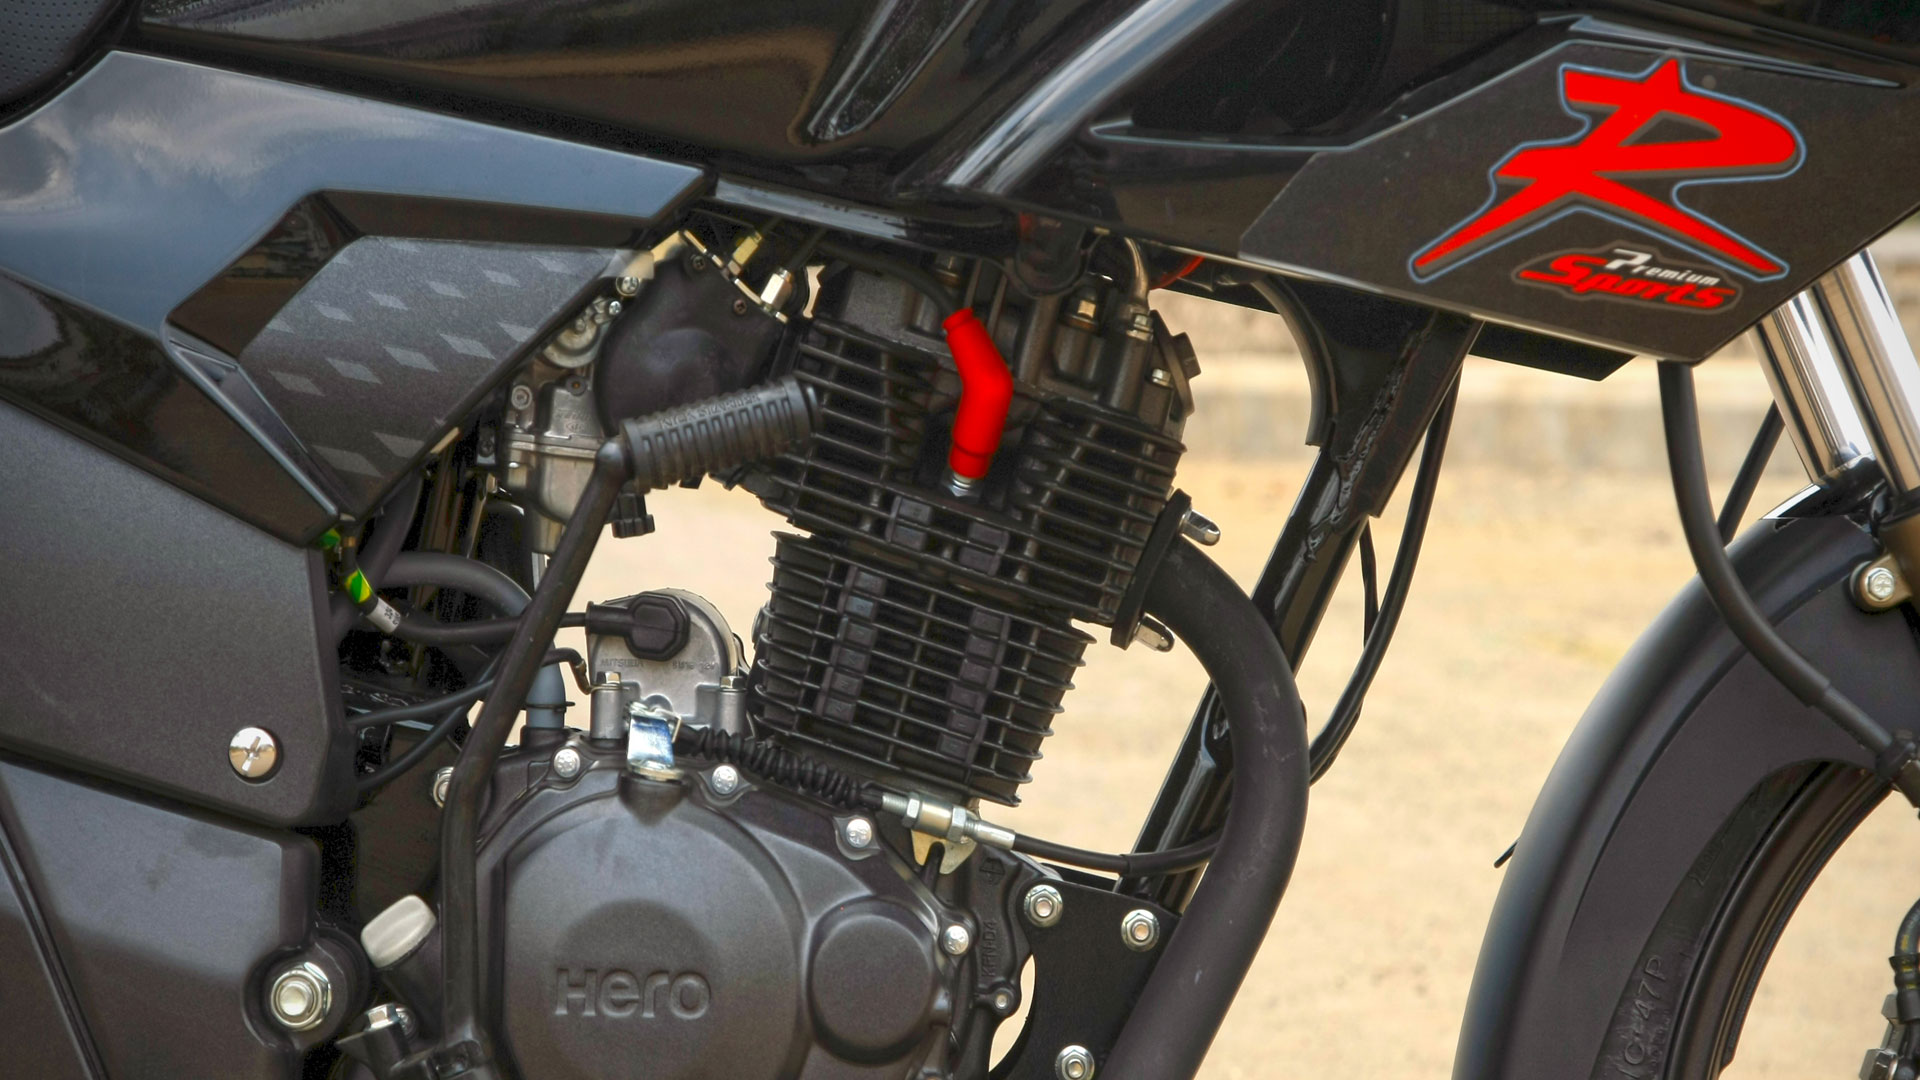 Upcoming Hero Karizma XMR Teased Again, Confirms A 210cc DOHC Engine